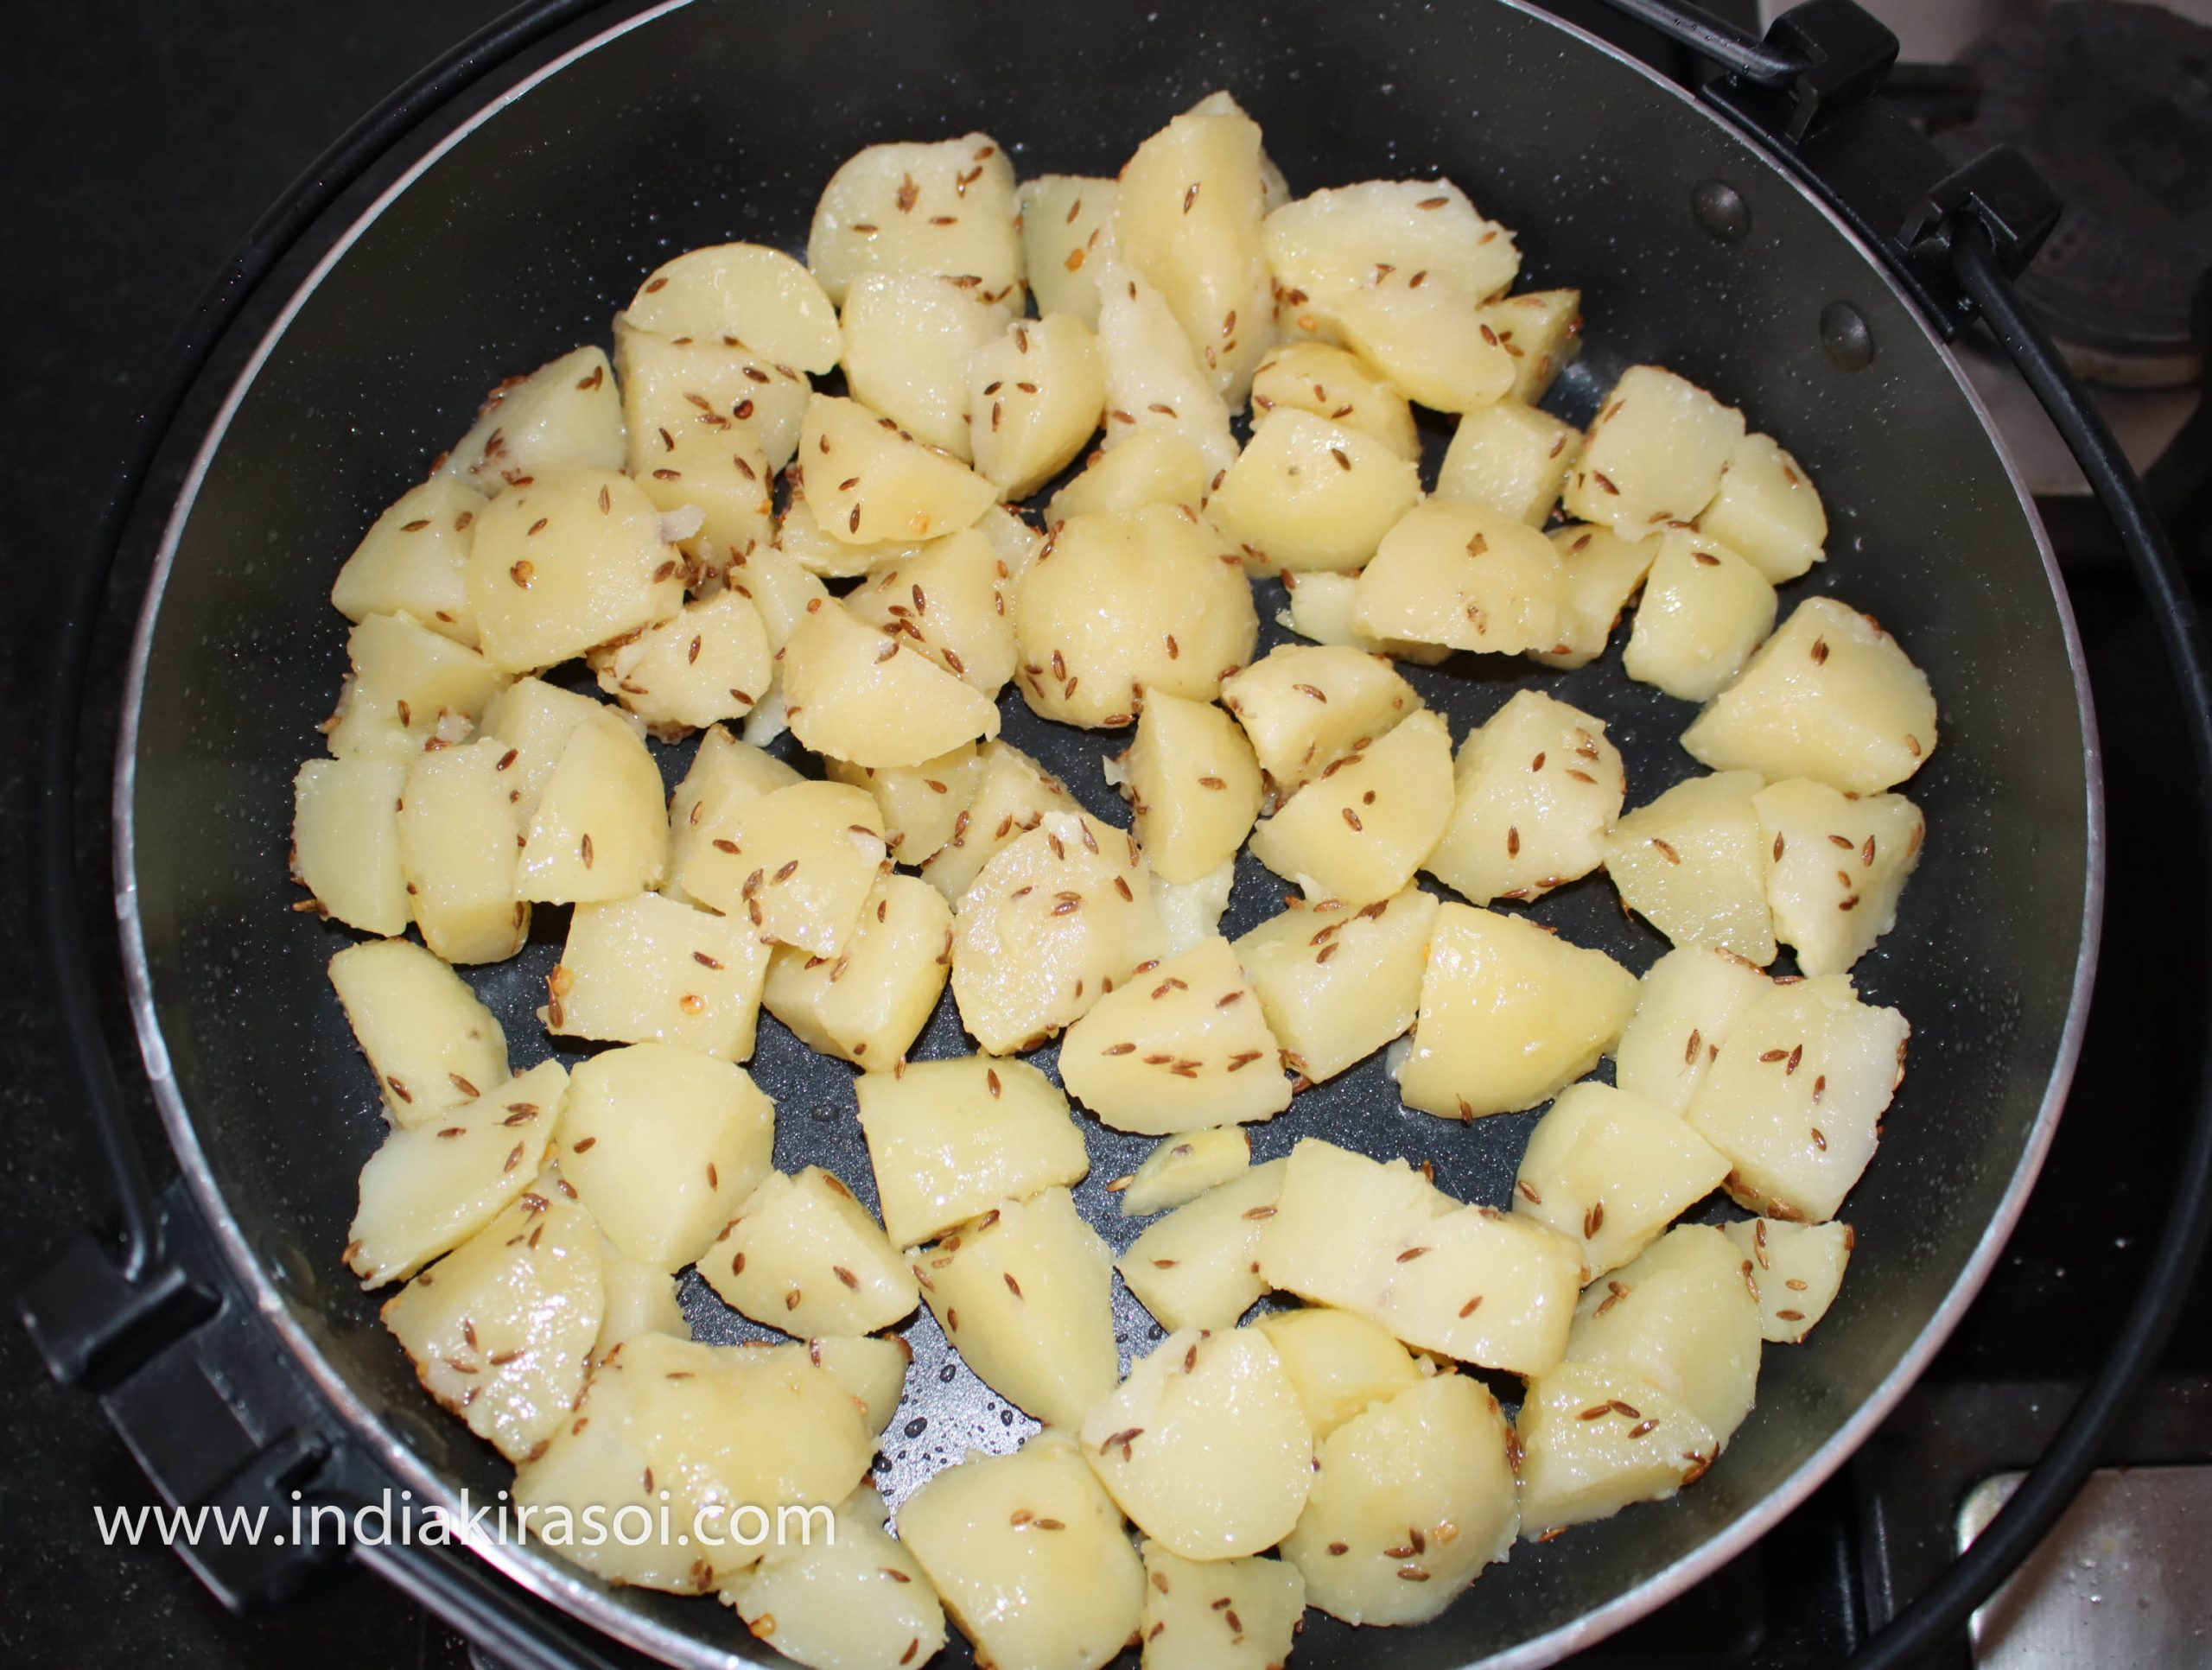 Stir potato with the help of spatula.